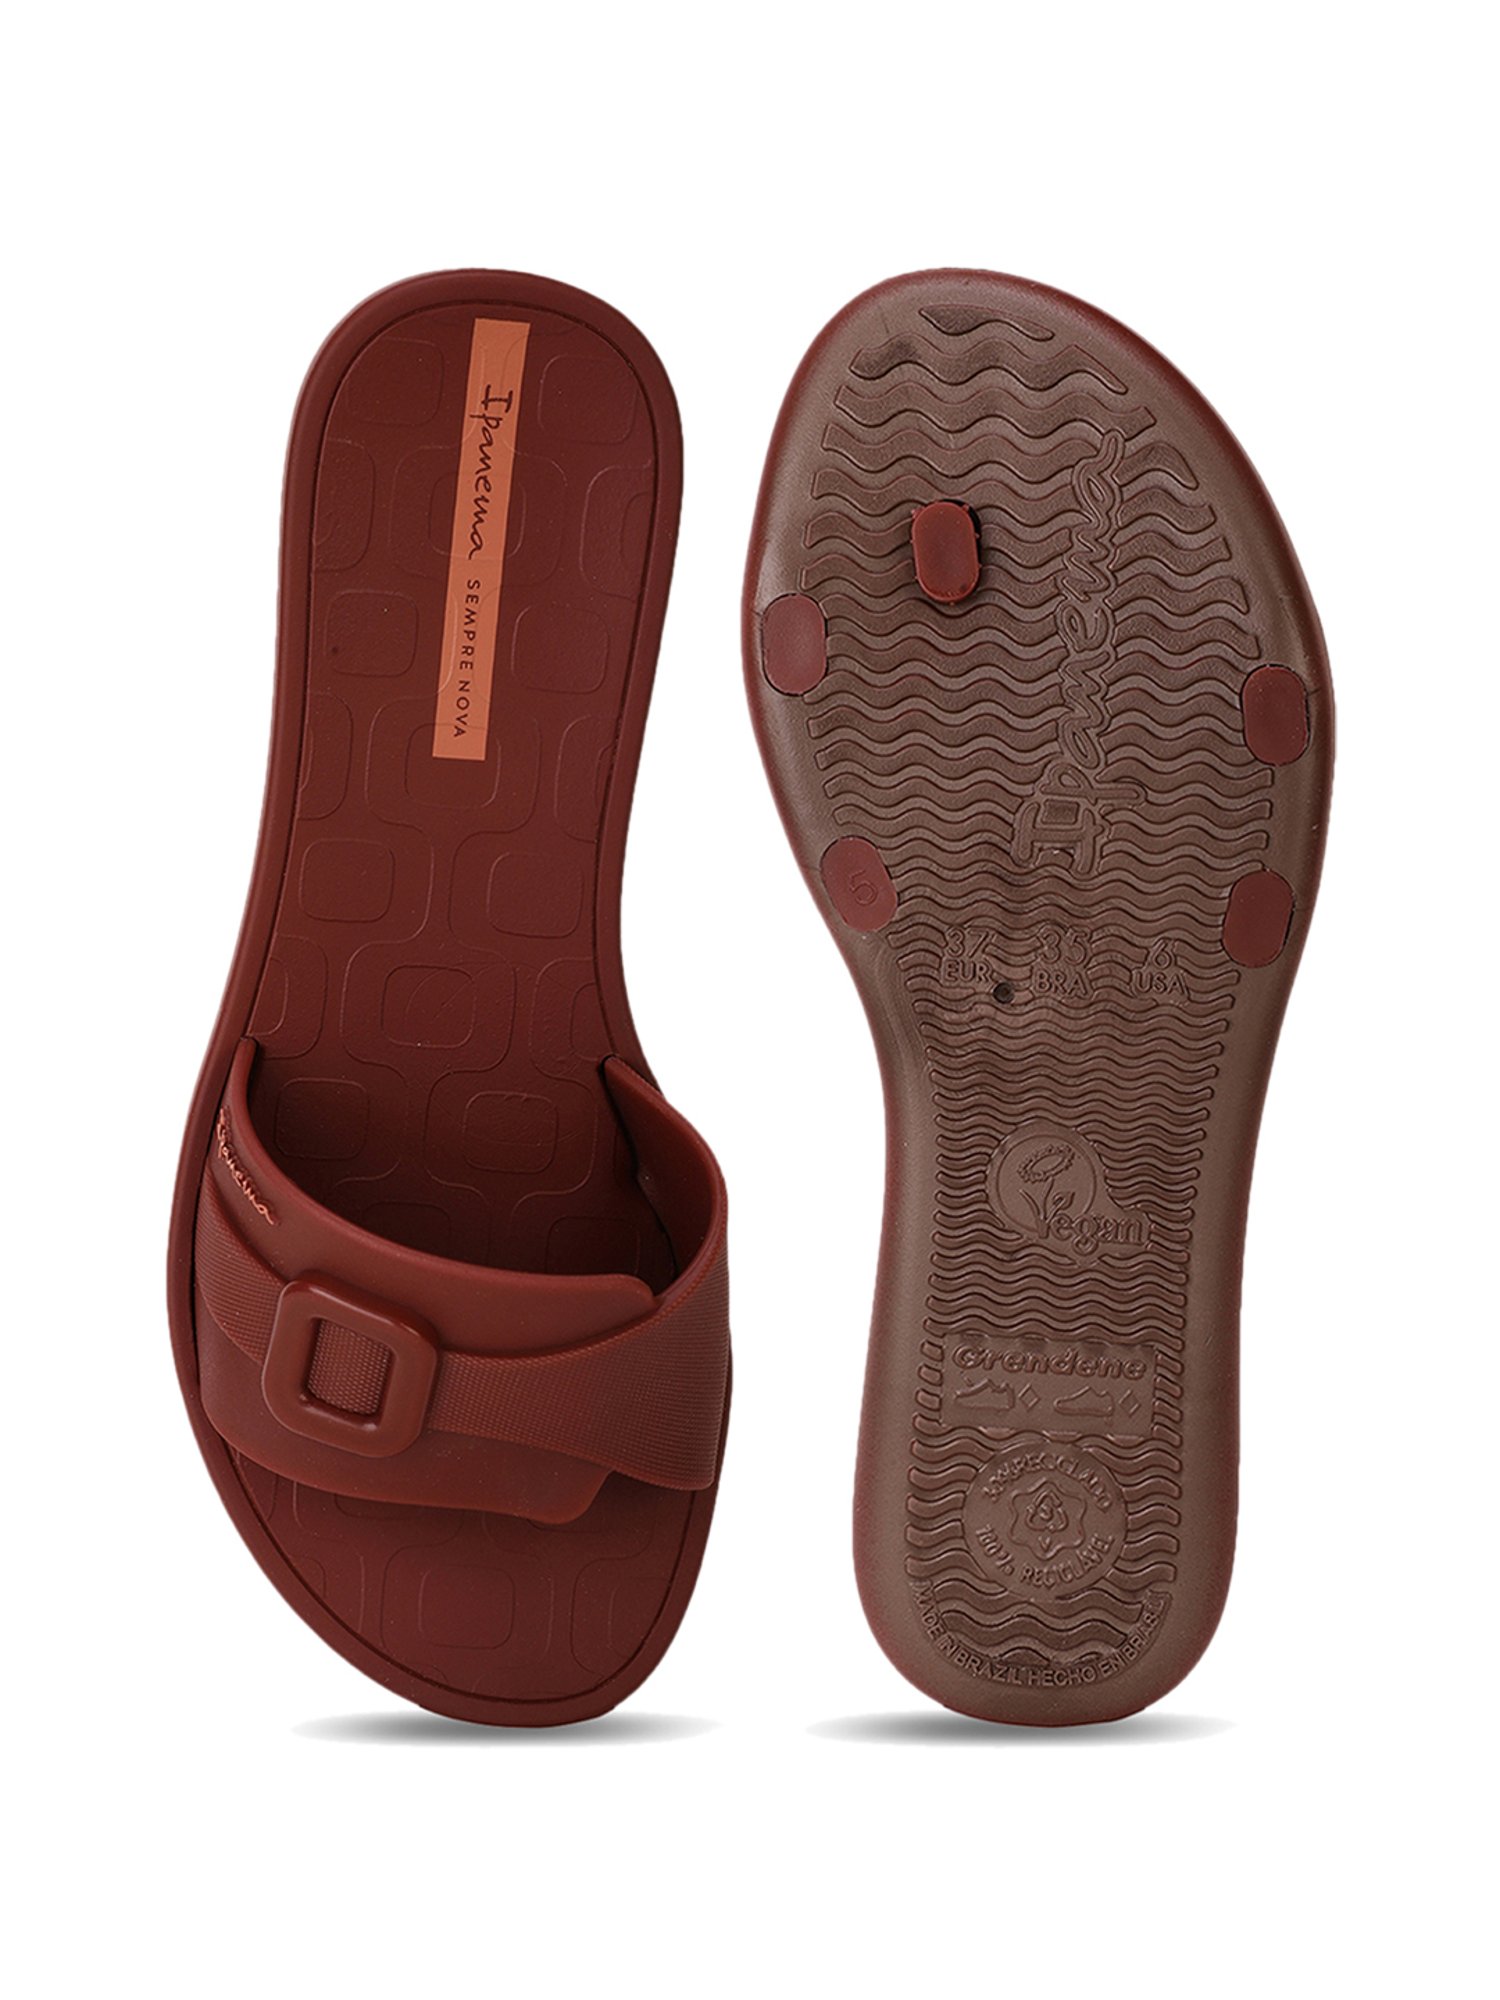 Men : Experience Elegance with Ipanema UK Sandals, Ipanema flip flops'  designs are sleek and bold.